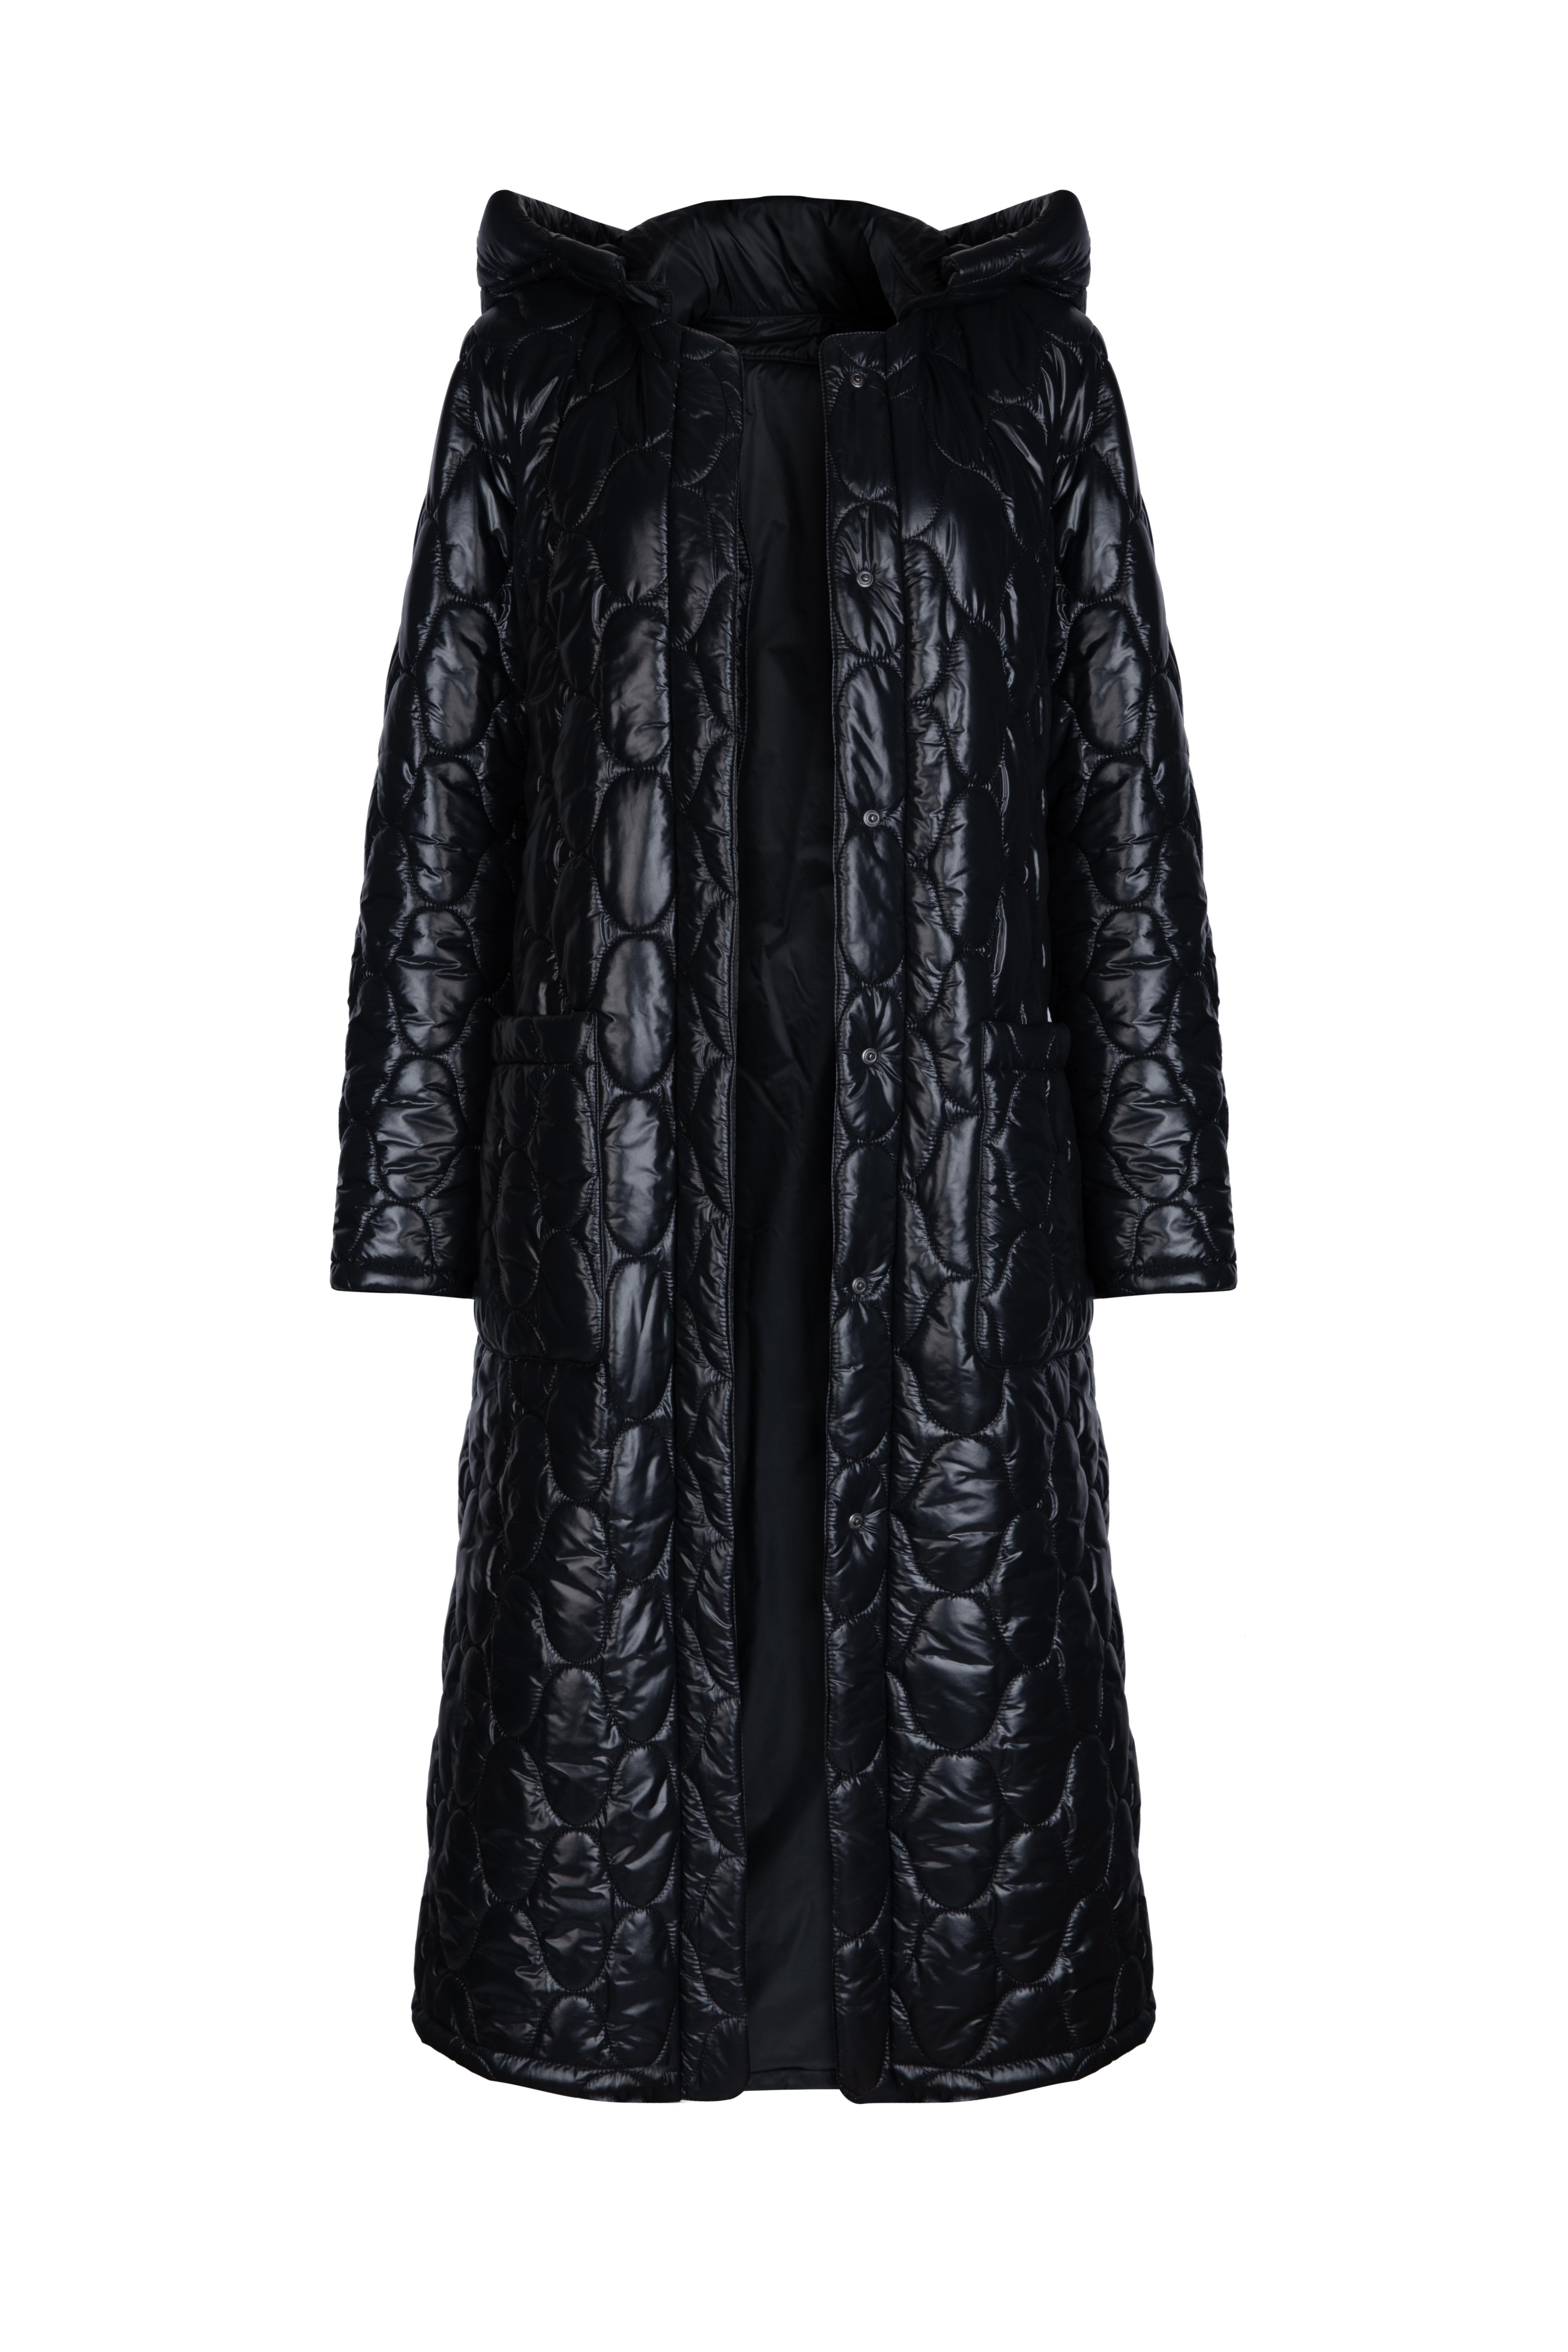 Verheyen London Aurora Quilted Coat with detachable hood - Size uk 10  For Sale 4